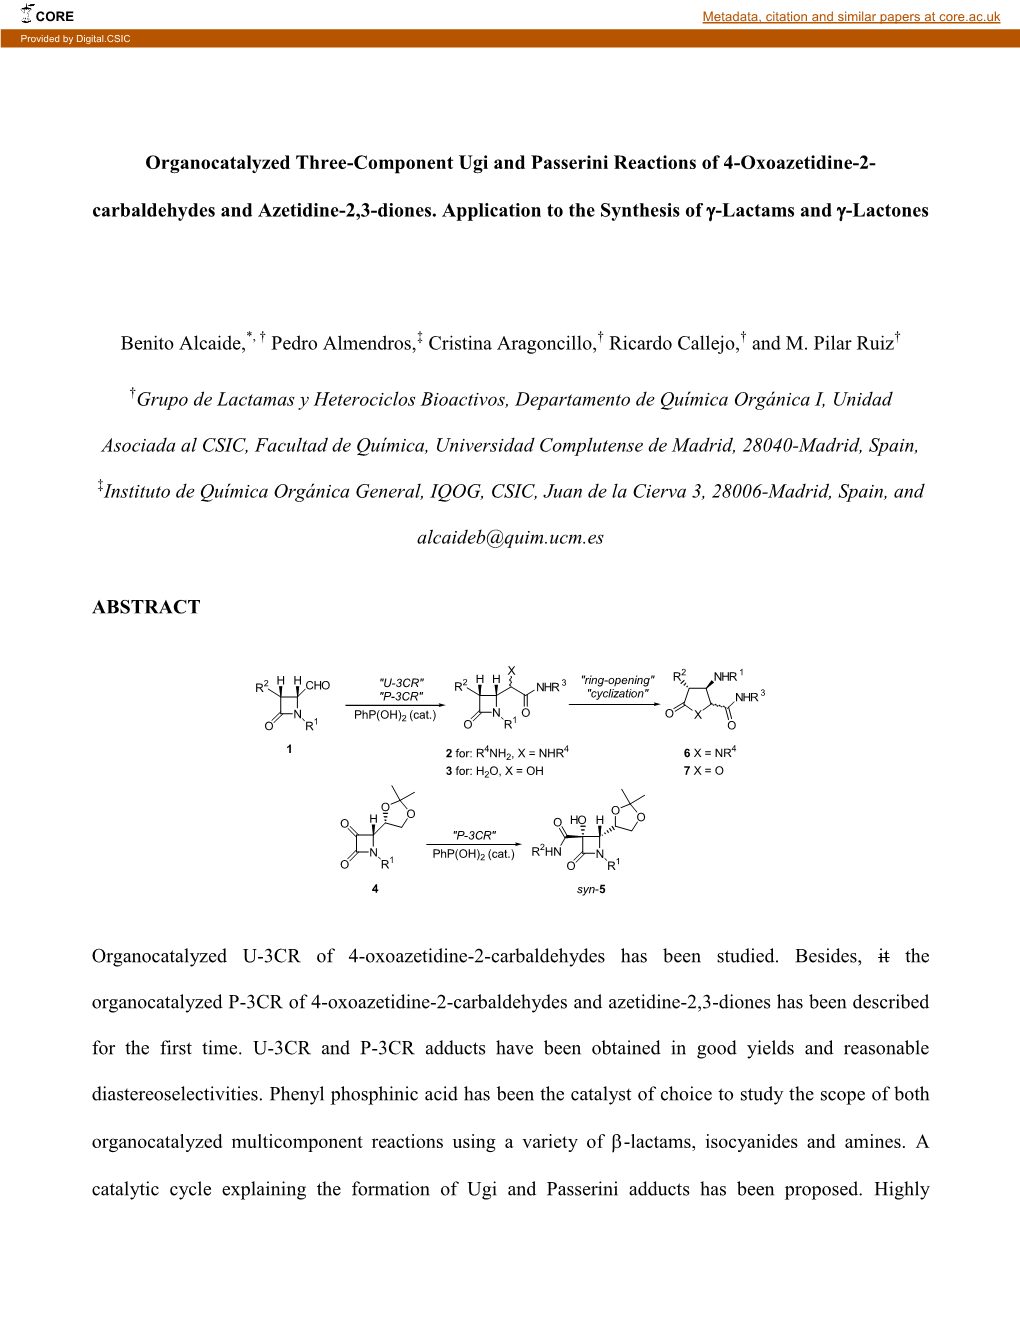 Organocatalyzed Three-Component Ugi and Passerini Reactions of 4-Oxoazetidine-2